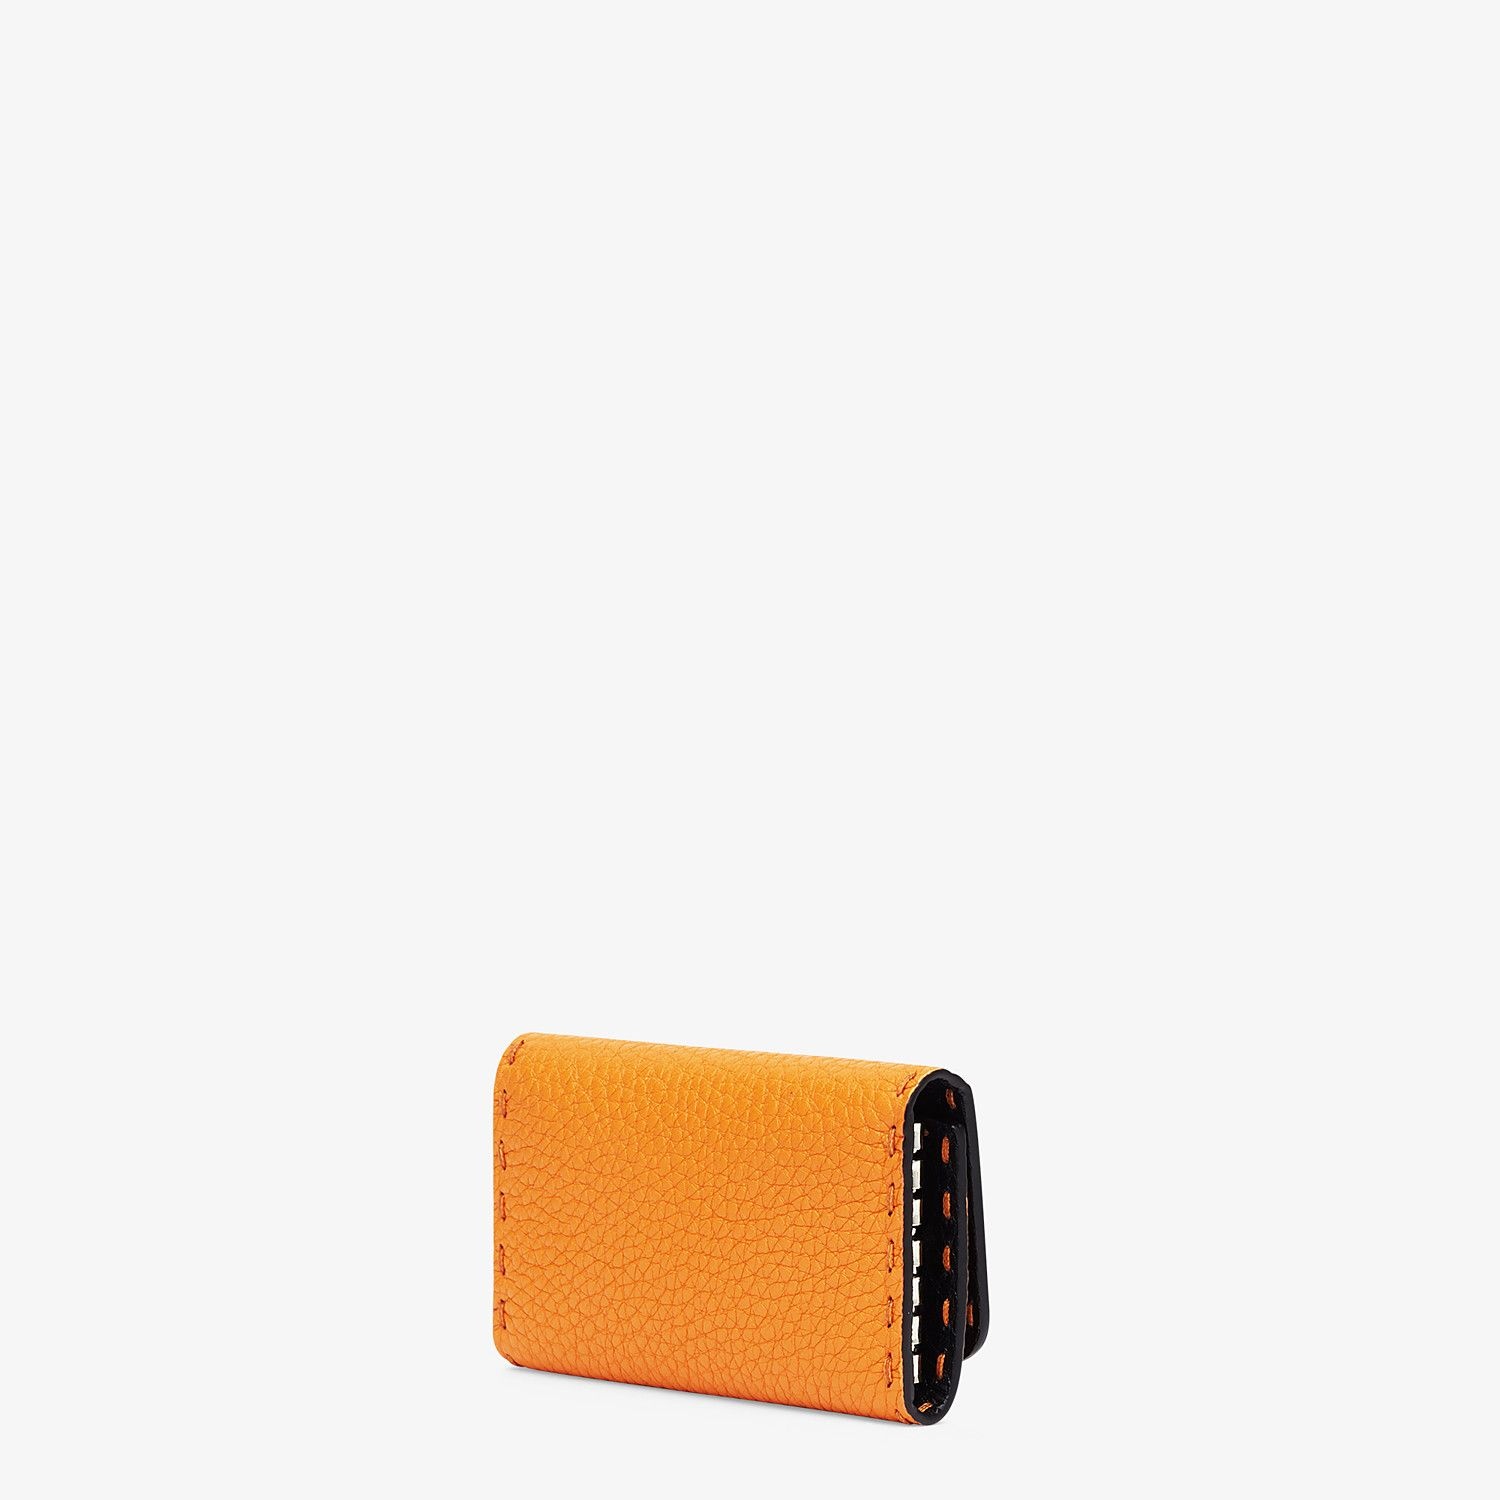 Orange leather pouch - 2